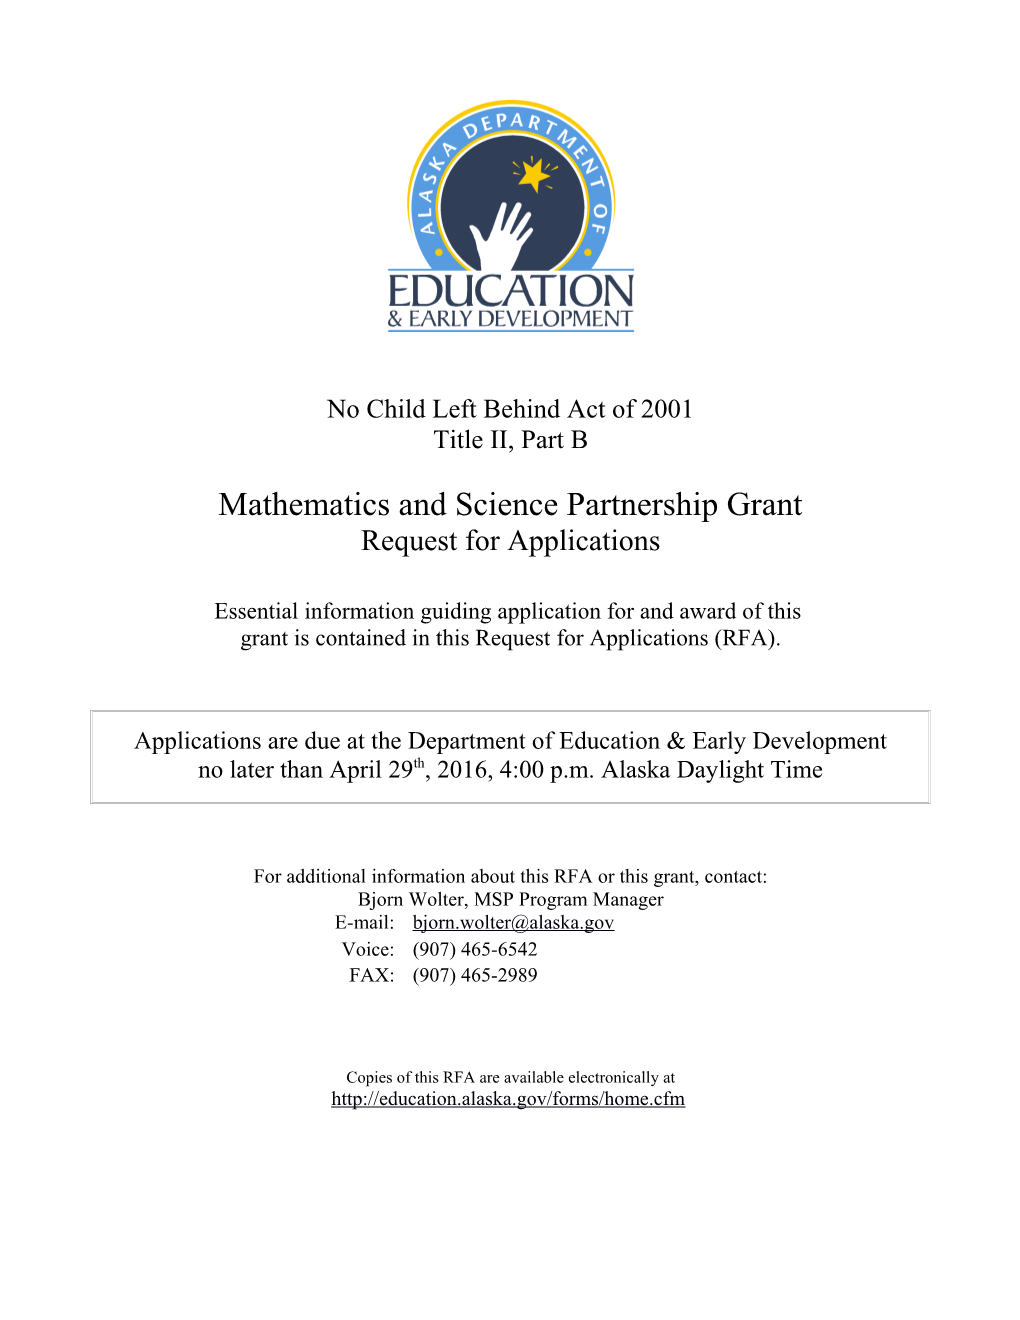 Mathematics and Science Partnership Grant